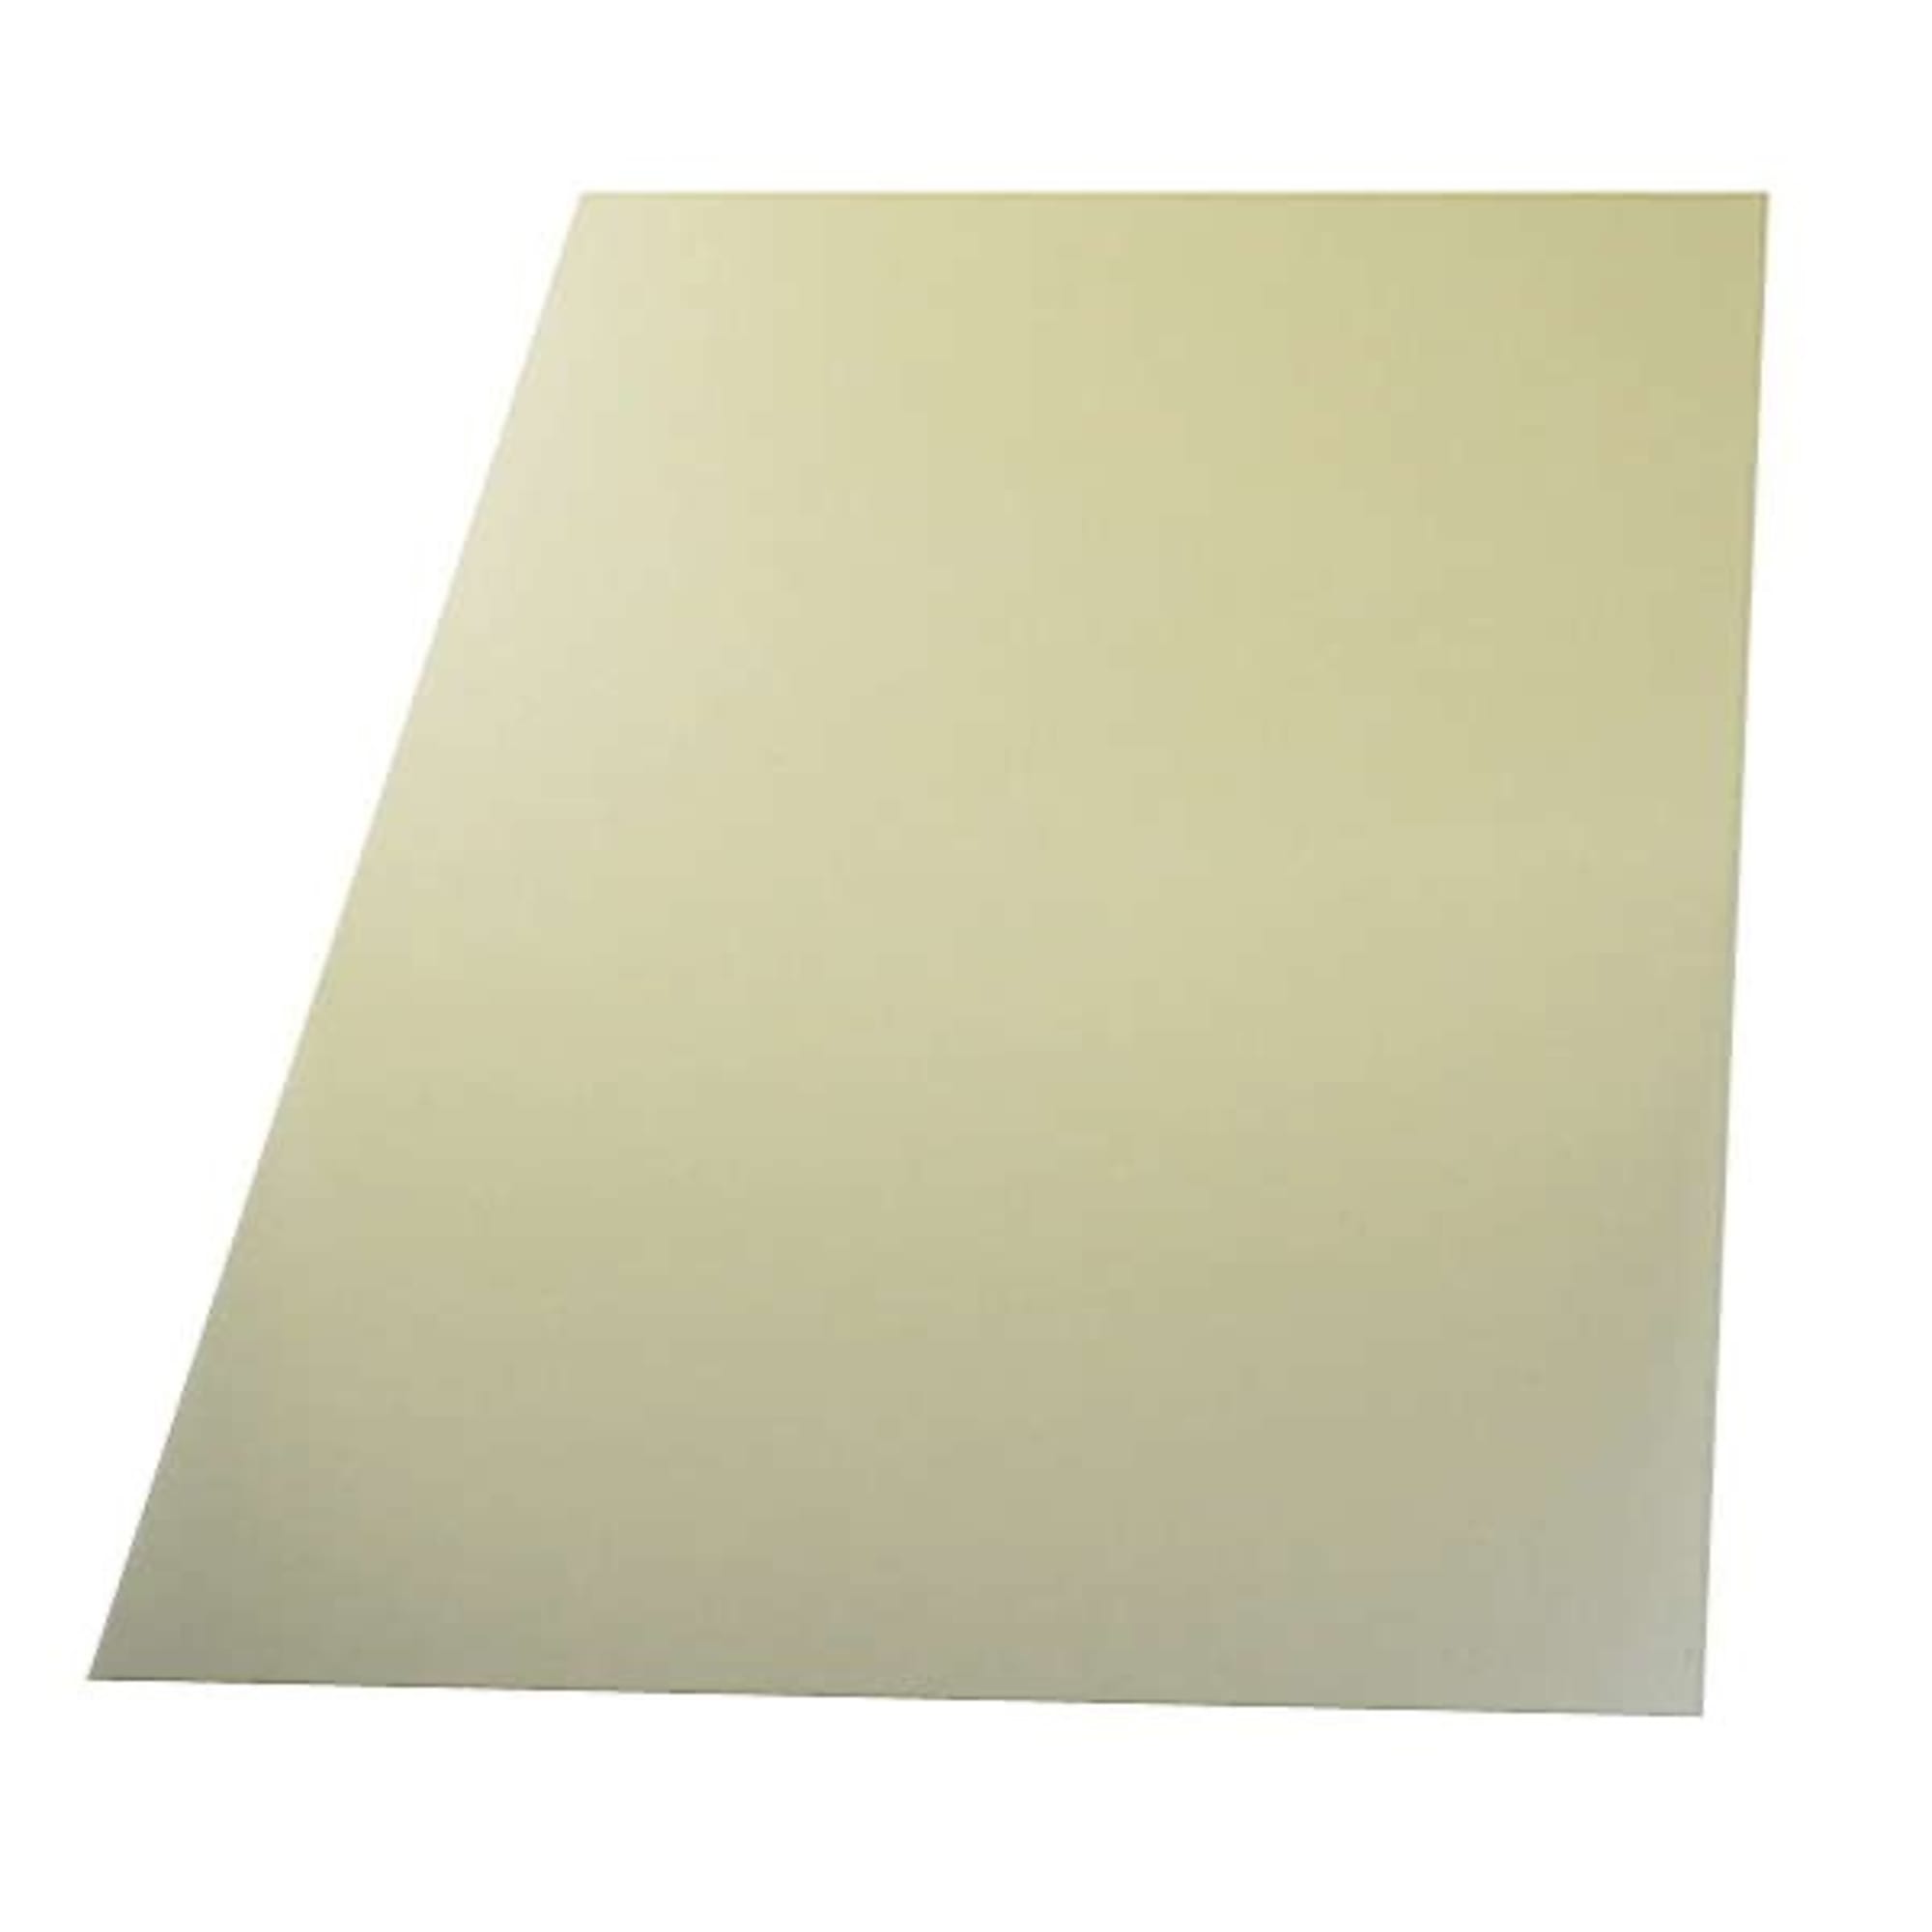 Glass fibre sheets 620 x 540 mm, image 4